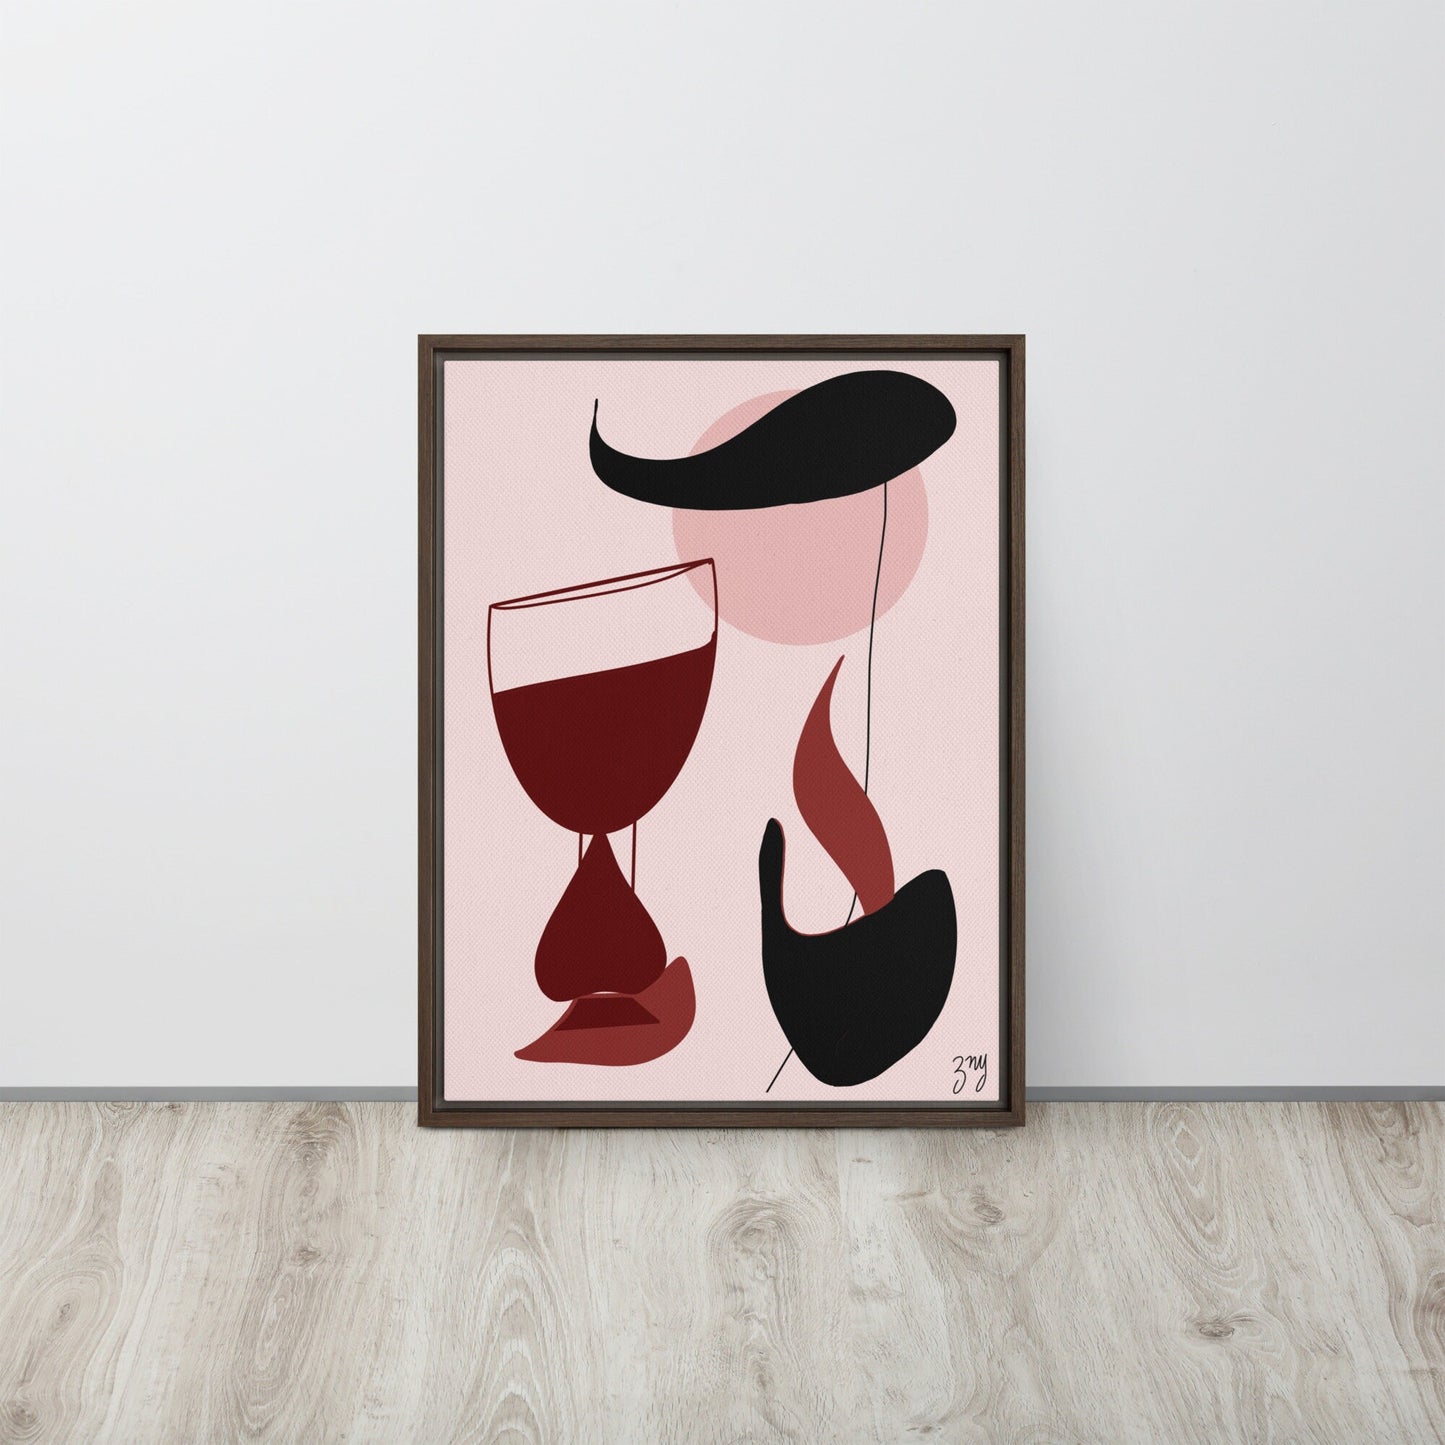 The Good Wine Framed Canvas Collection. Wall Art, Artwork, Abstract Art, Modern Art, Mid Century Art